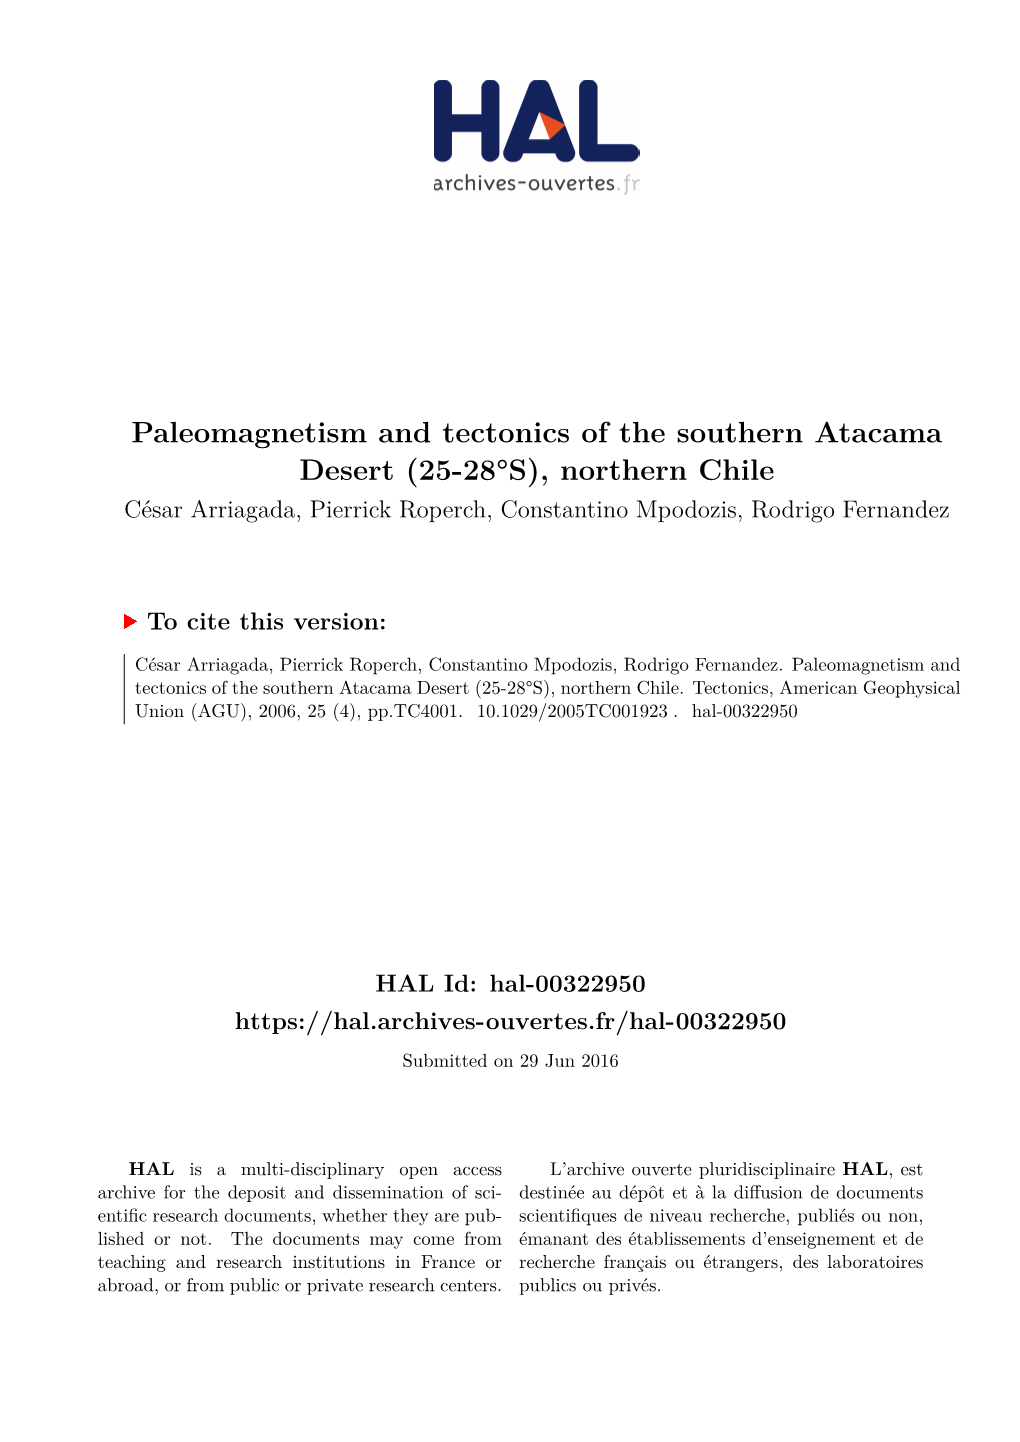 Paleomagnetism and Tectonics of the Southern Atacama Desert (25-28°S), Northern Chile César Arriagada, Pierrick Roperch, Constantino Mpodozis, Rodrigo Fernandez